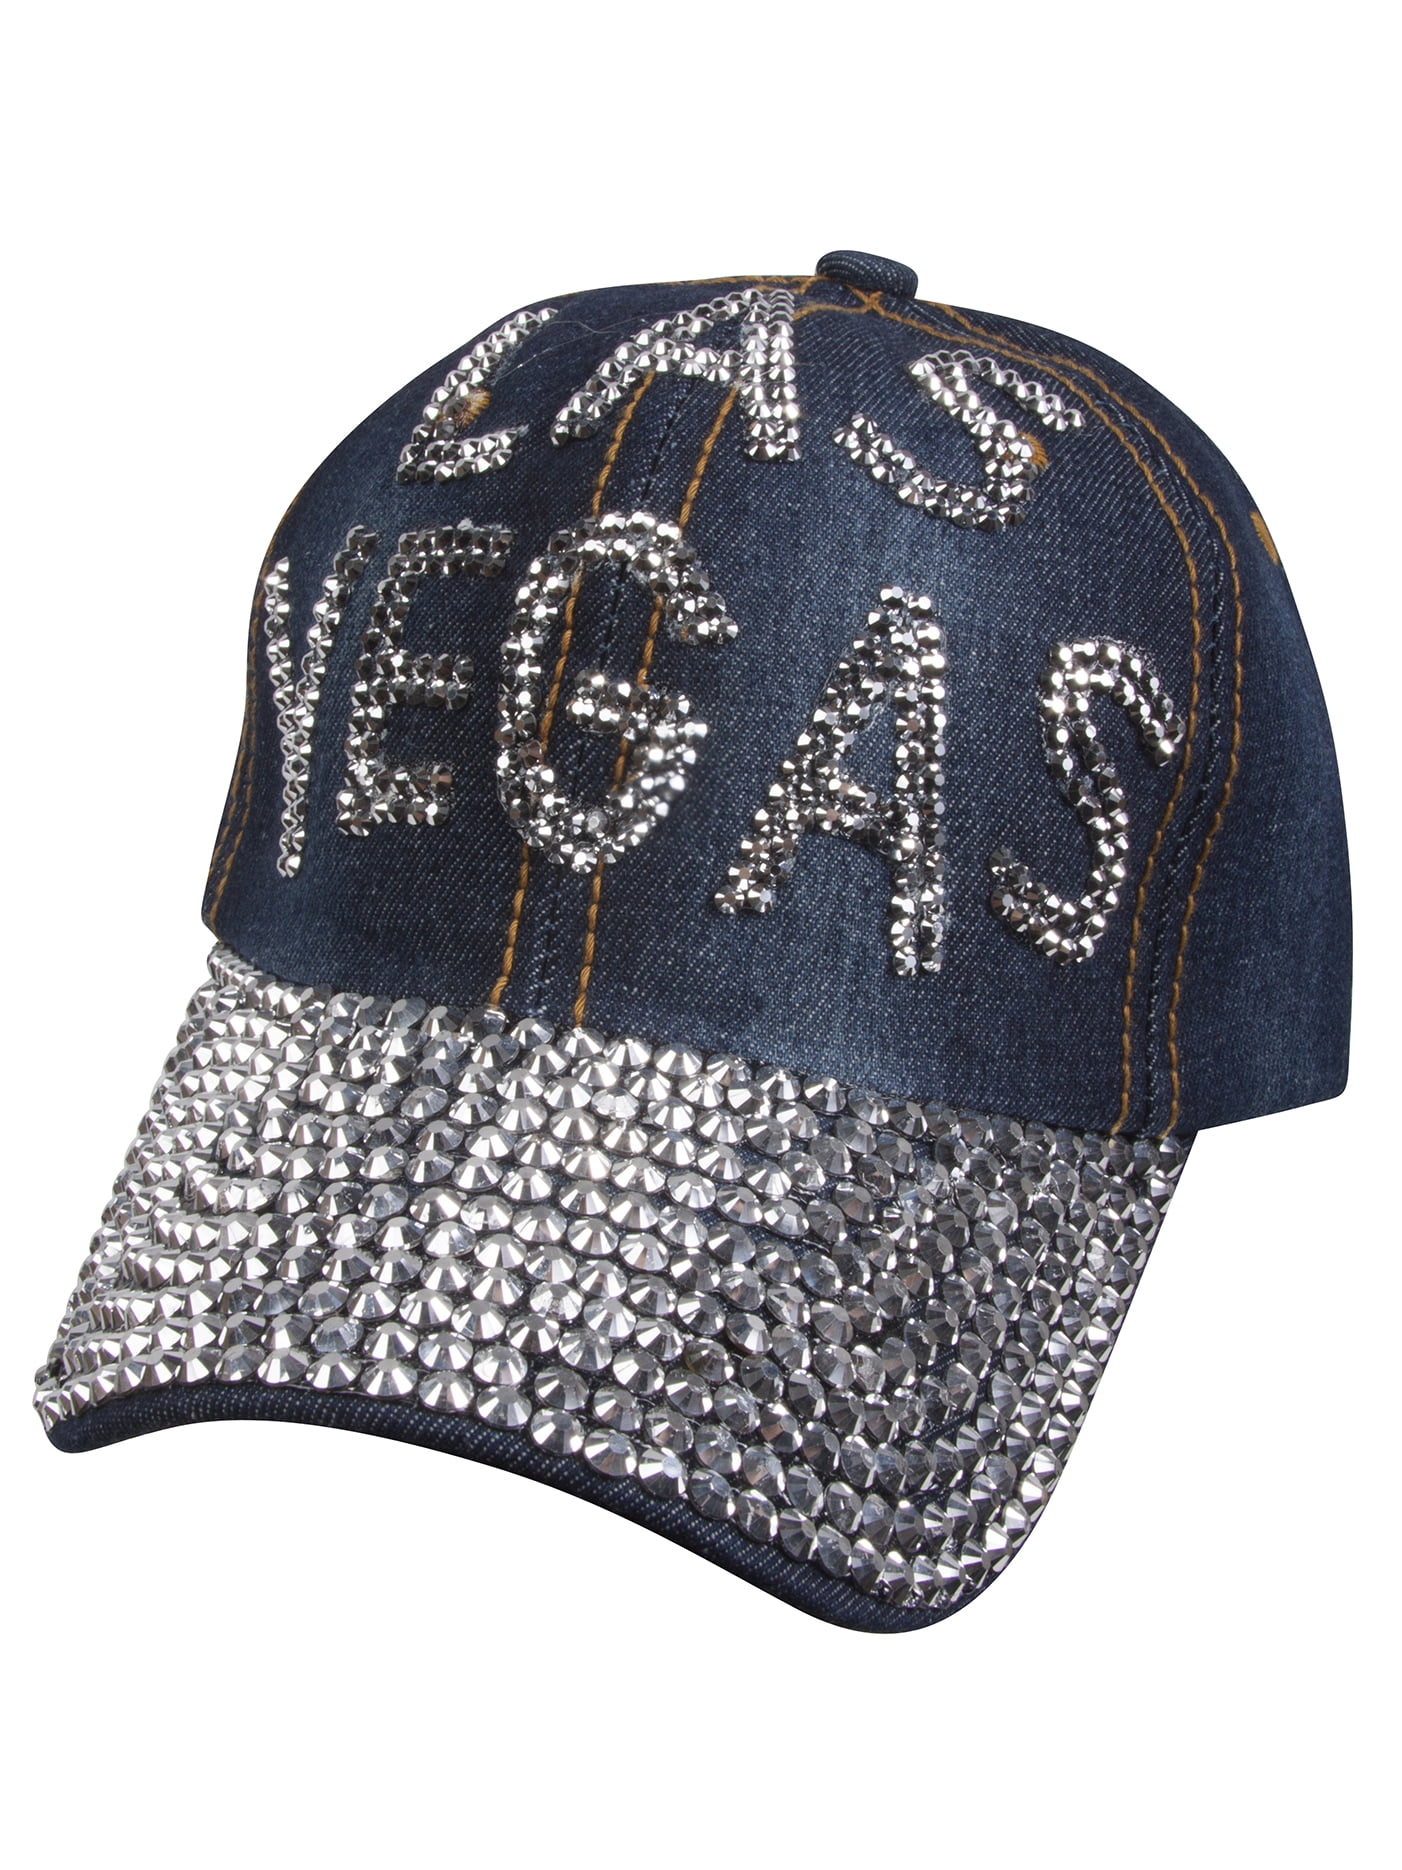 New Womens Cap Denim Jeans Crystal Sequins Hat Baseball Sparkle Caps Adjustable 